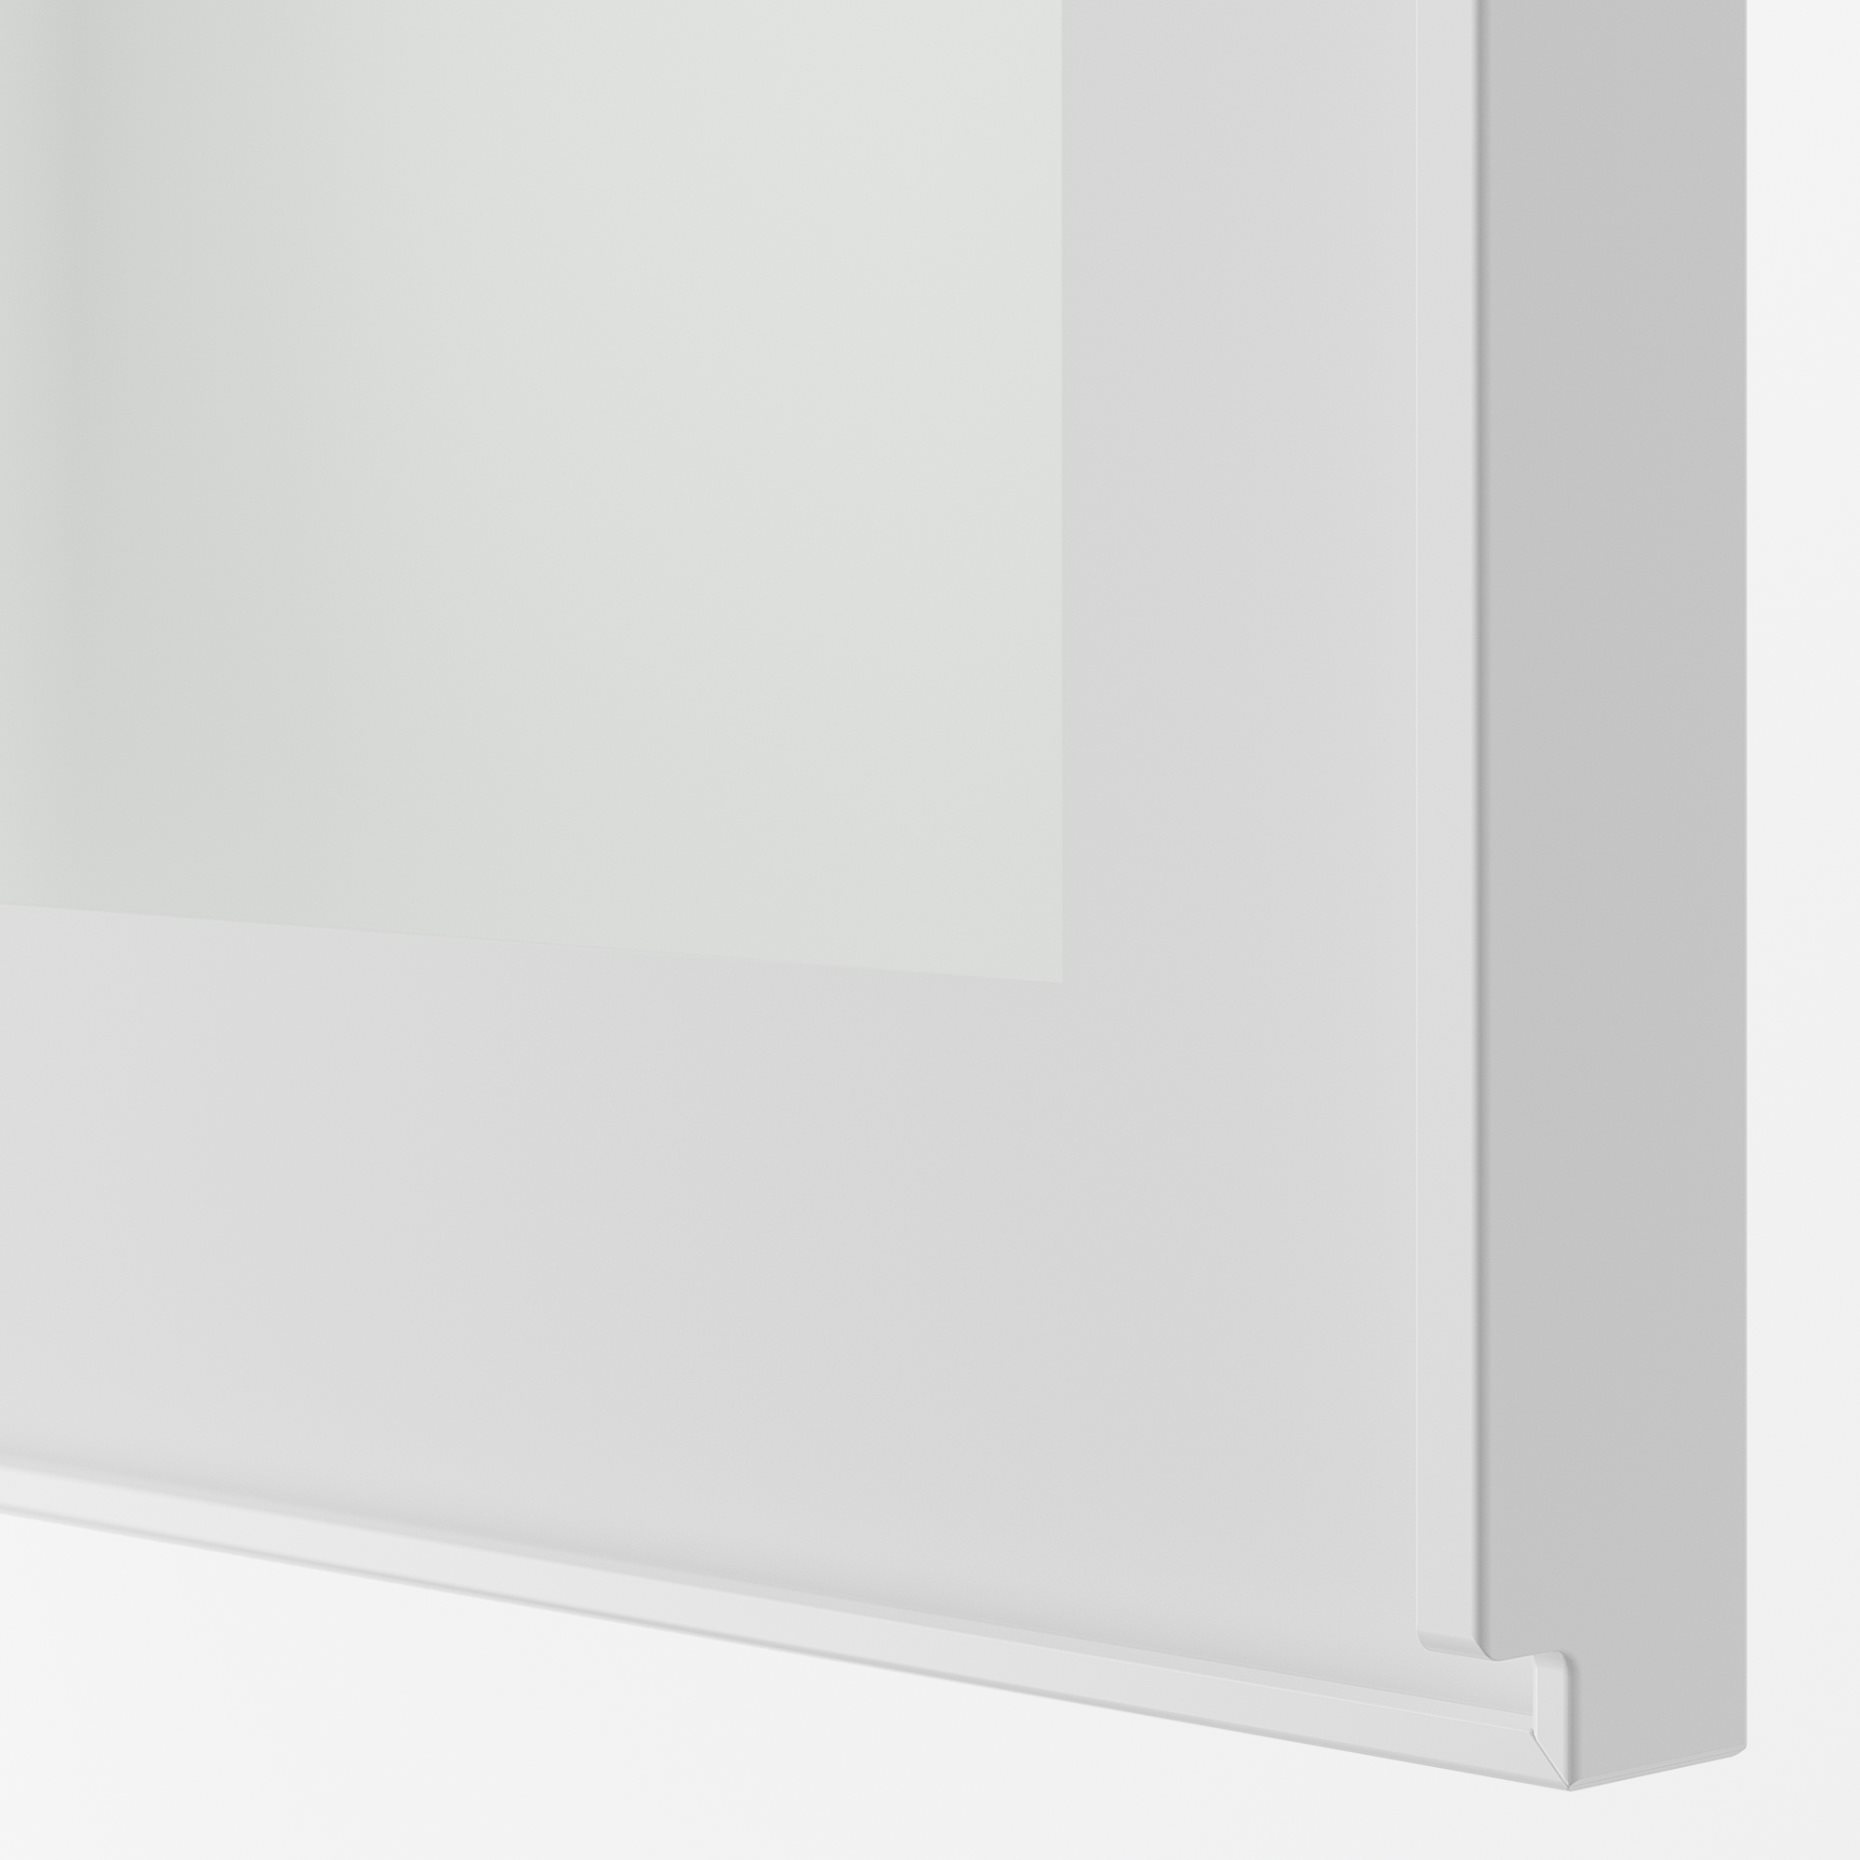 HEJSTA, γυάλινη πόρτα, 30x80 cm, 305.266.33